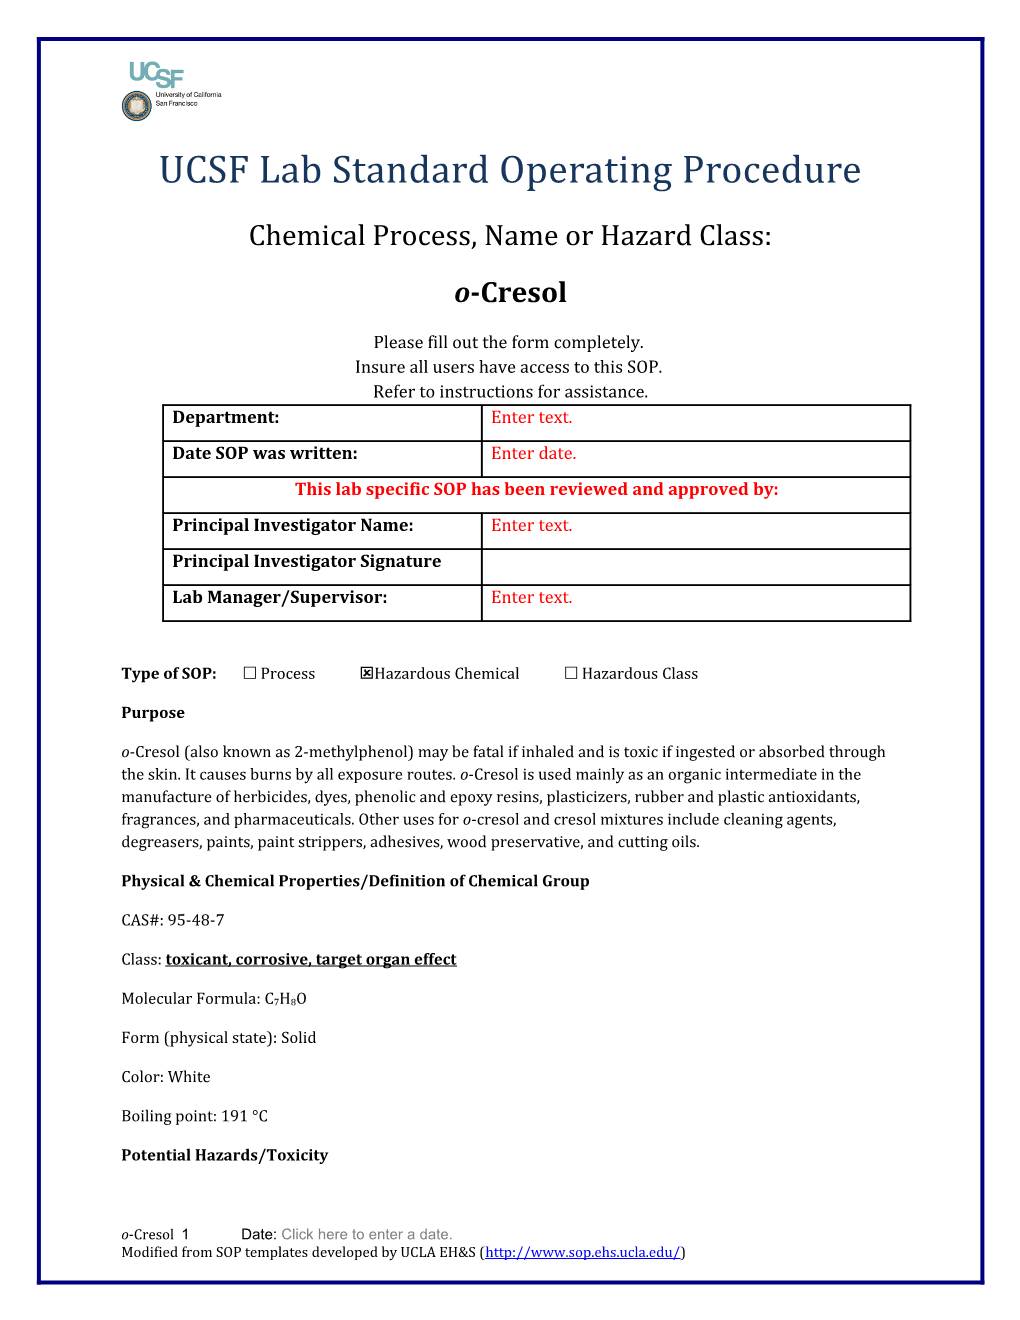 UCSF Lab Standard Operating Procedure s38